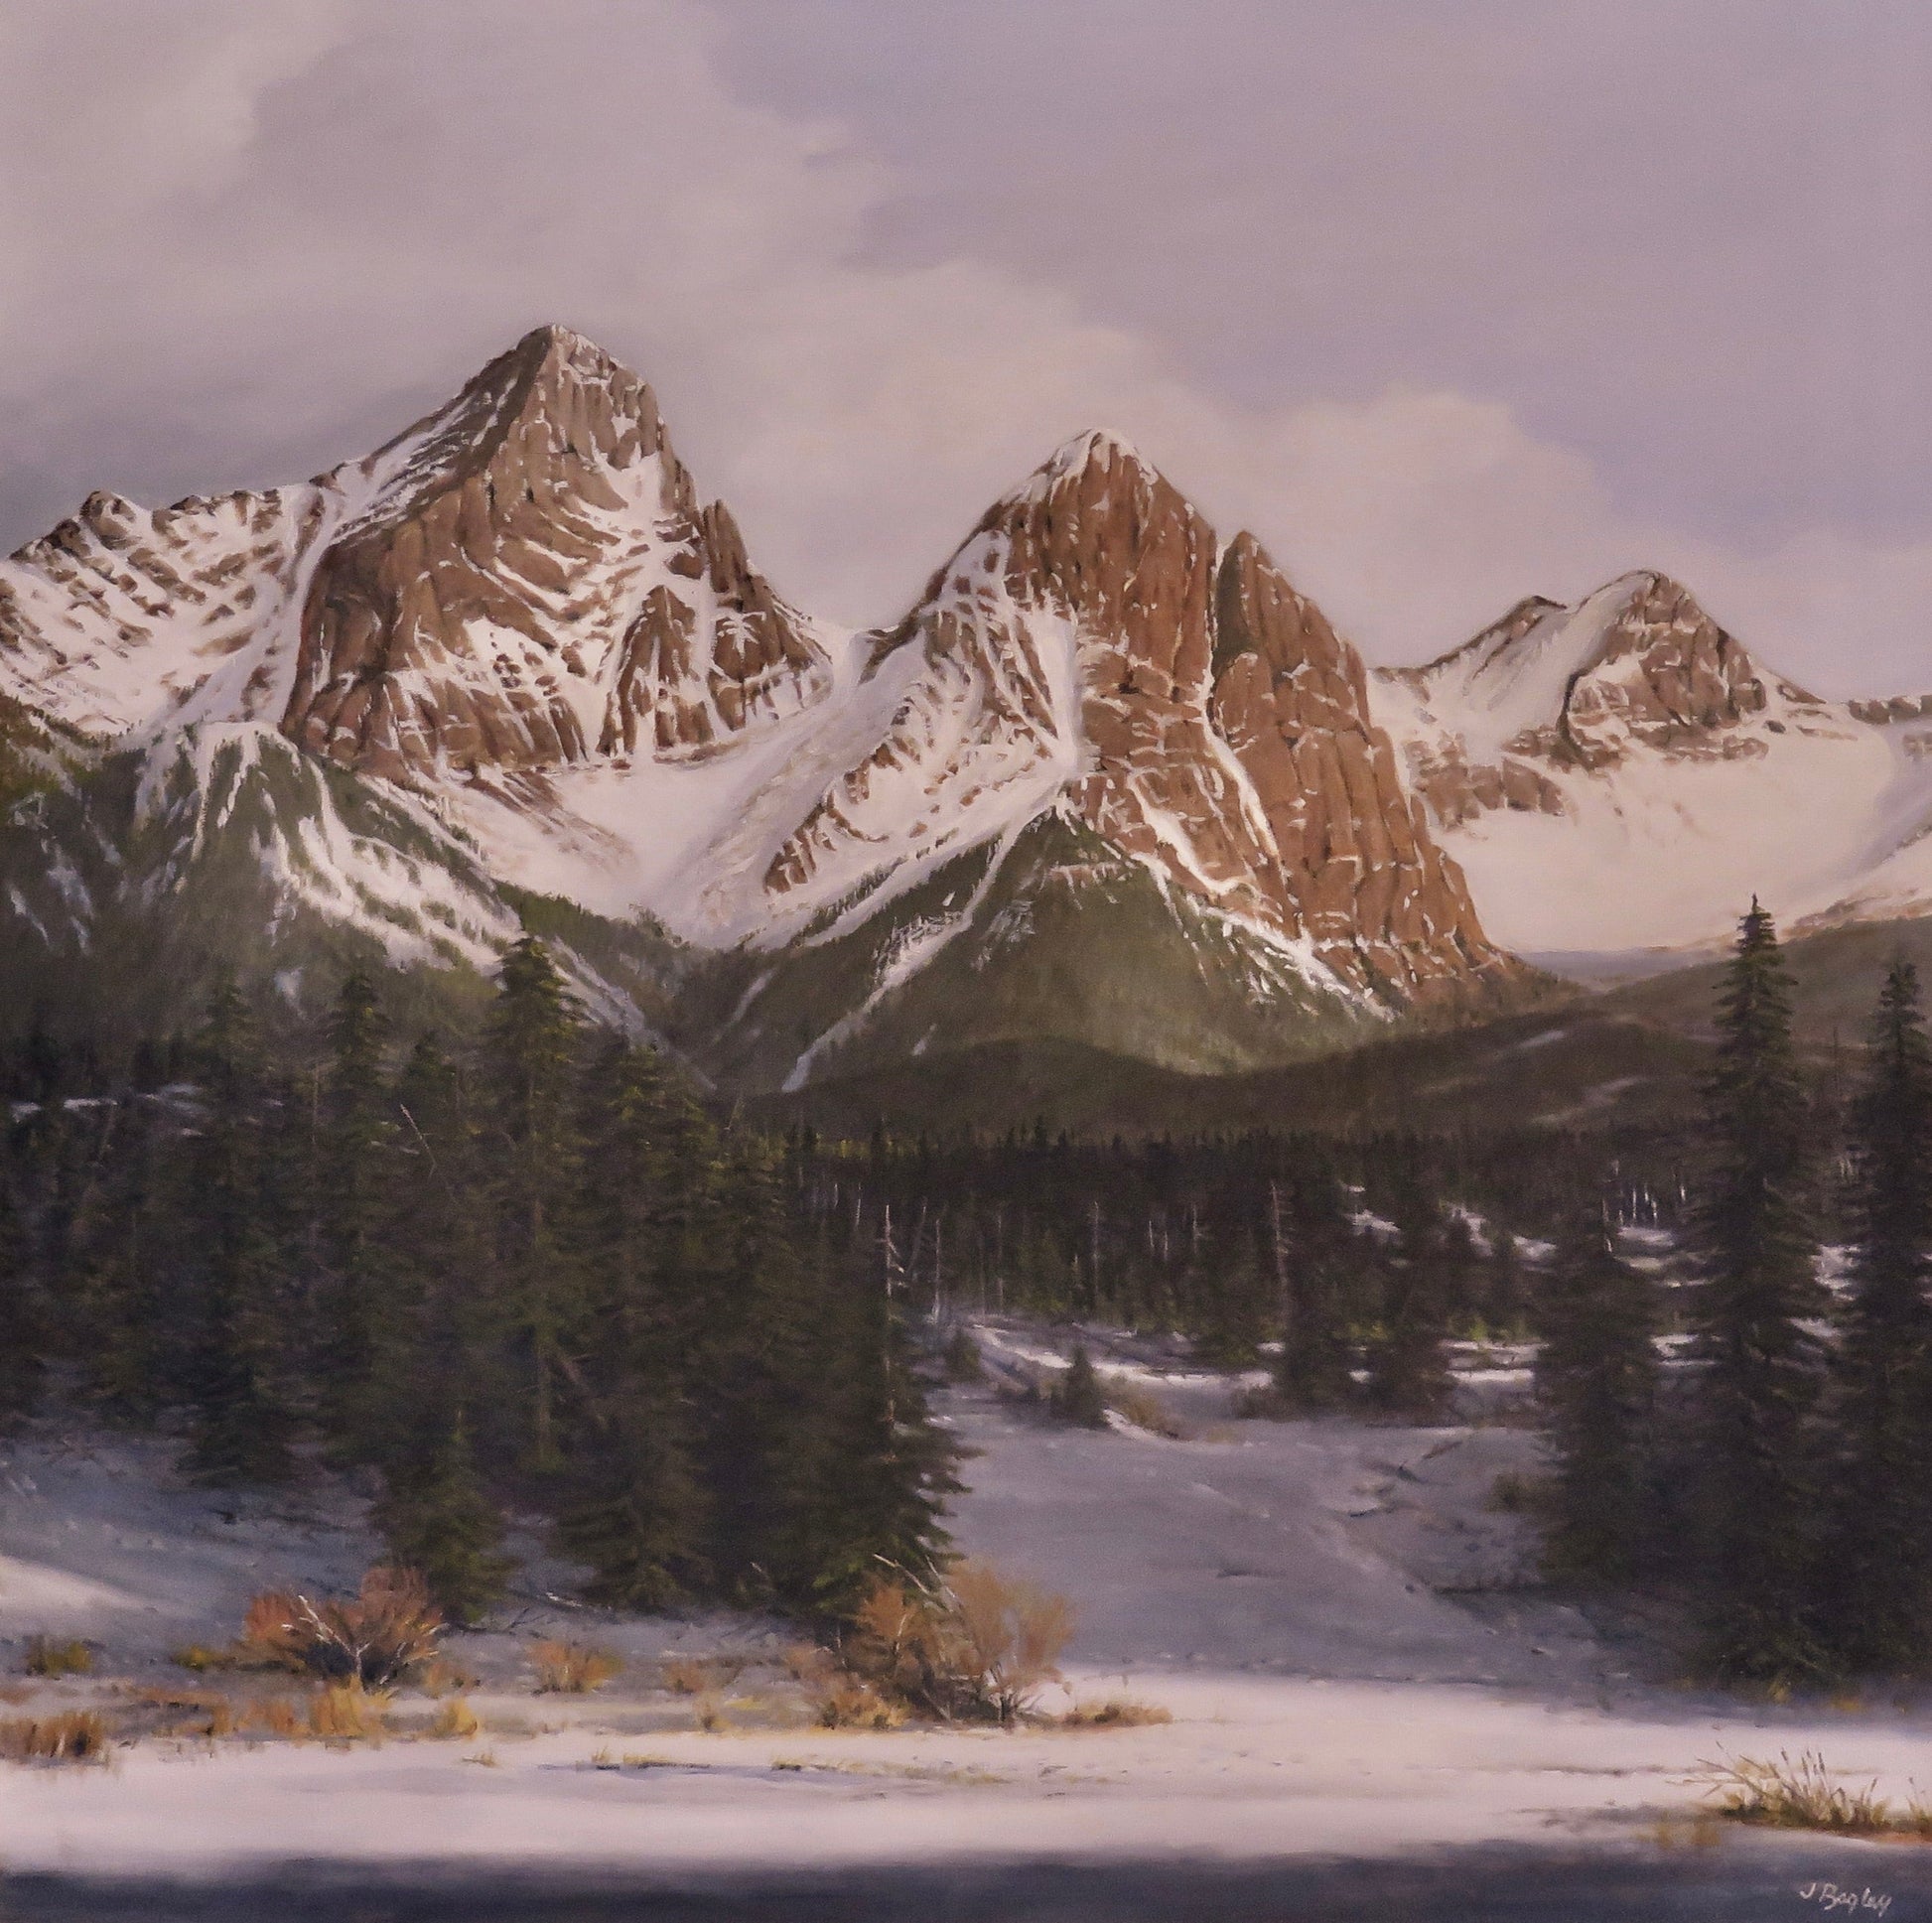 December Snow on the Needles-Painting-Jim Bagley-Sorrel Sky Gallery